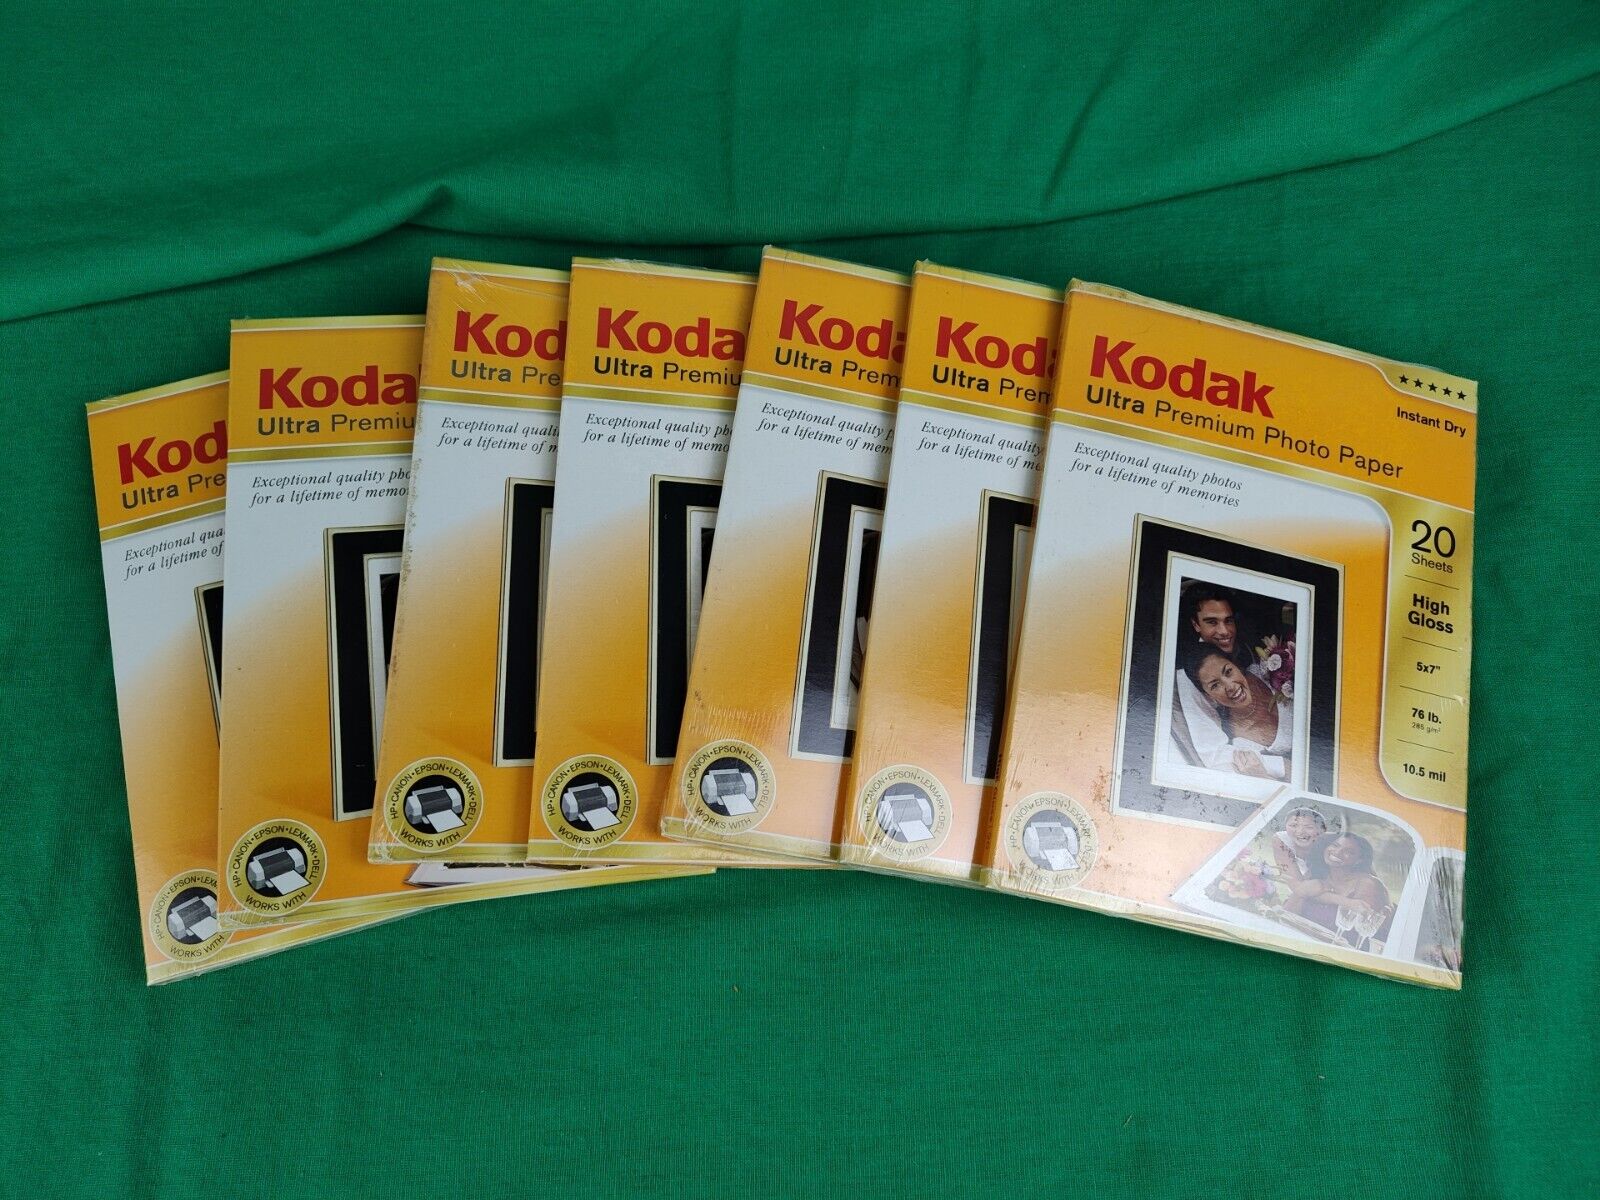 7 Kodak Ultra Premium Photo Paper - 20 Sheets, High Gloss, 5 x 7, 76#, 10.5 mil